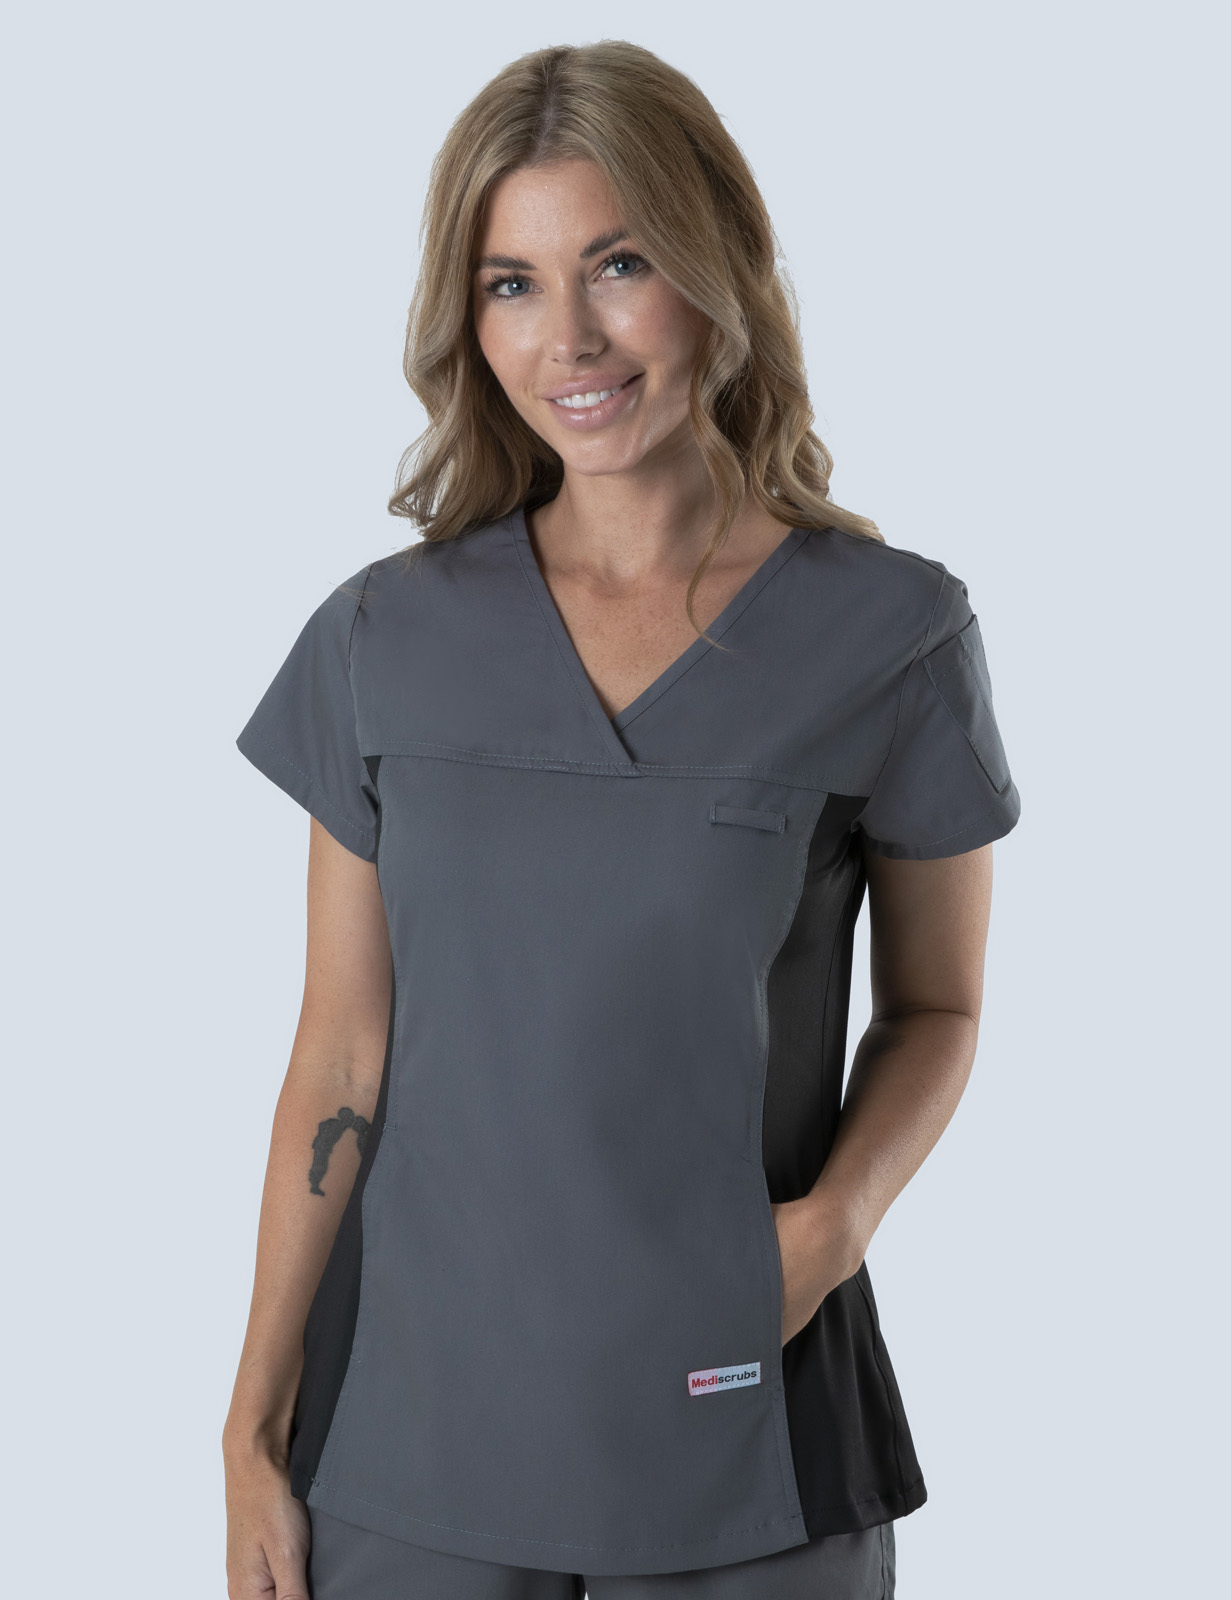 Ipswich Hospital Pharmacy Uniform Top Only Bundle (Women's Fit Spandex Top in Steel Grey + 3 Logos)